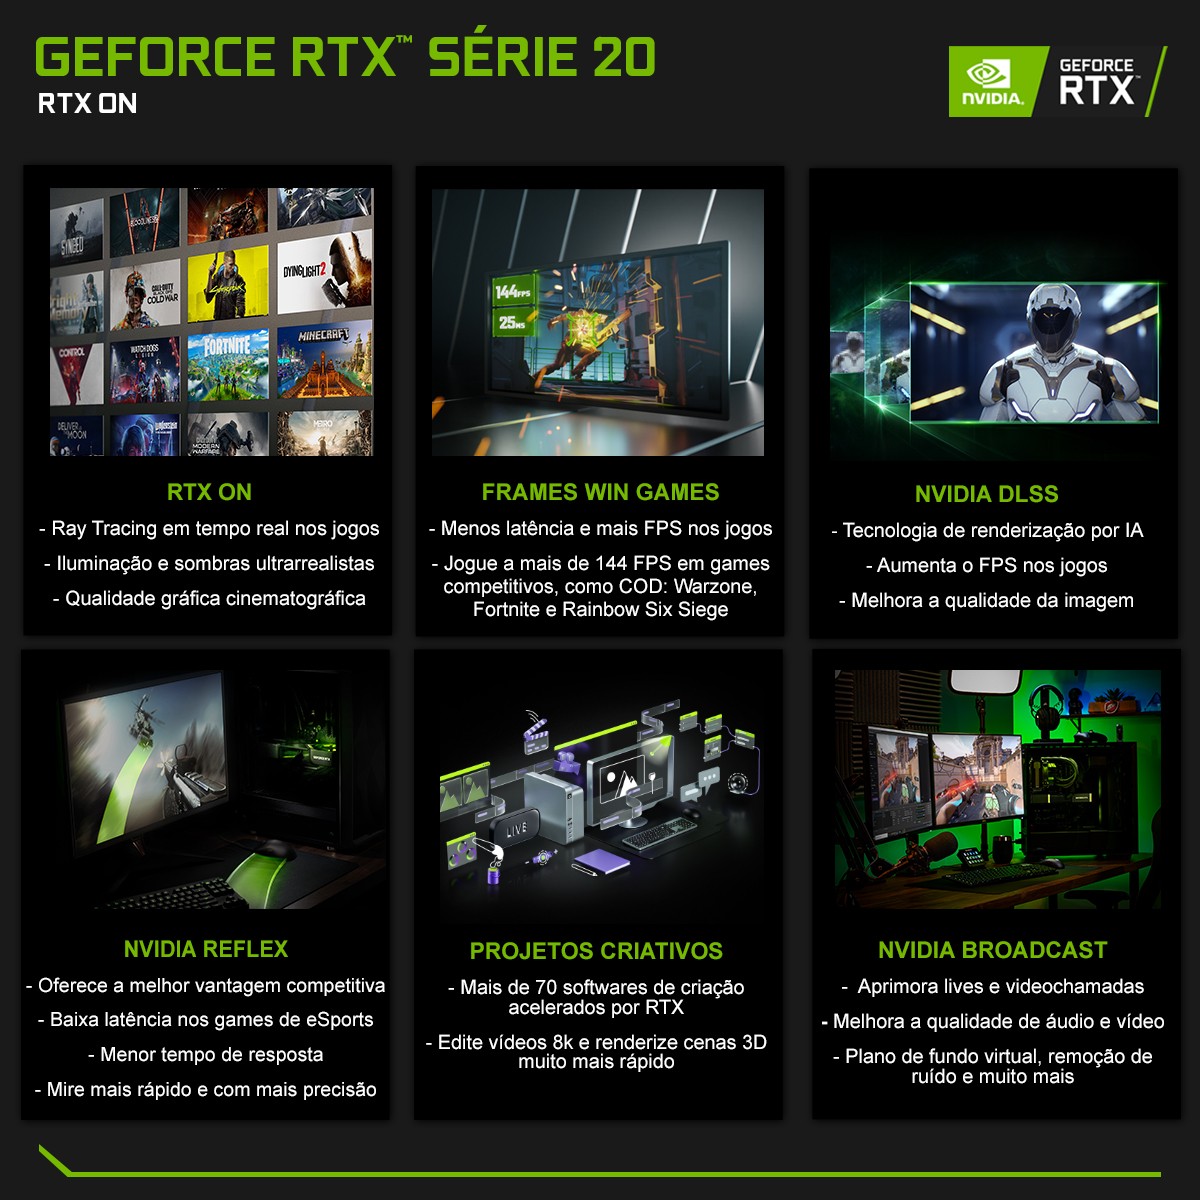 Placa De Vídeo Gainward Geforce RTX 2070 Phantom GLH (GOES LIKE HELL), 8GB GDDR6, 256Bit